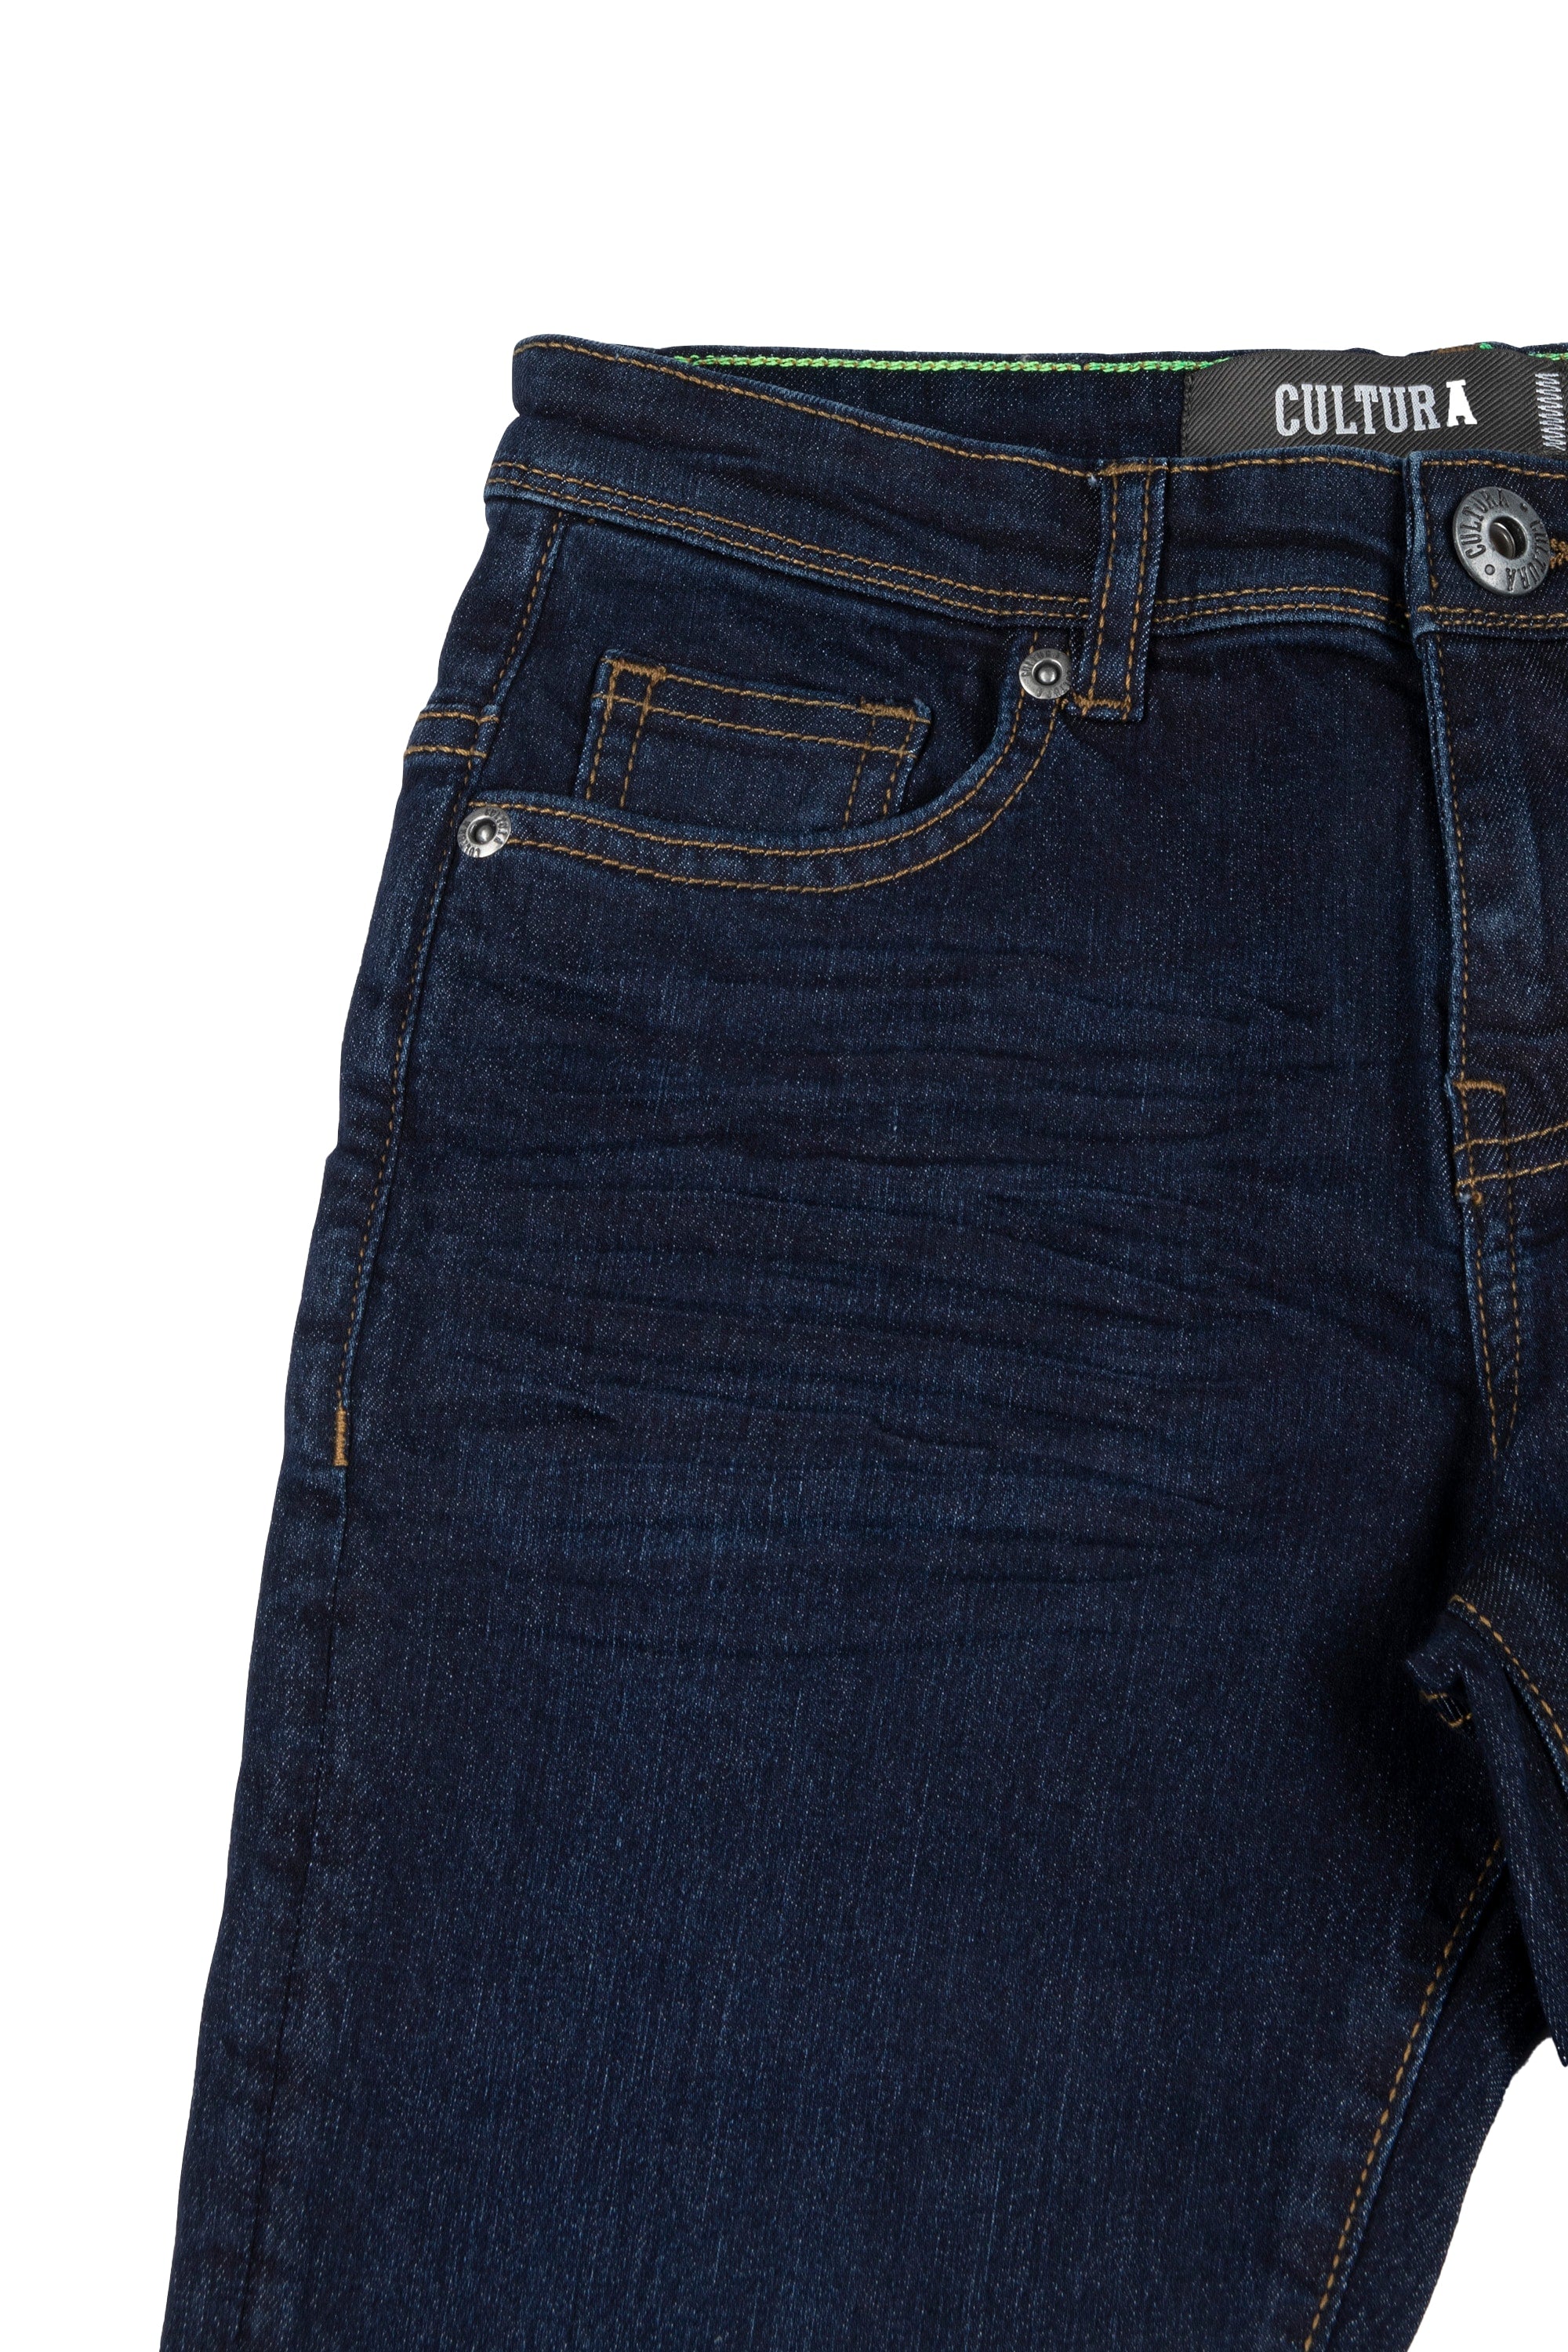 Stitch – Boys Denim Slim Jeans Accent Cultura XRay X-RAY JEANS Wash Pants